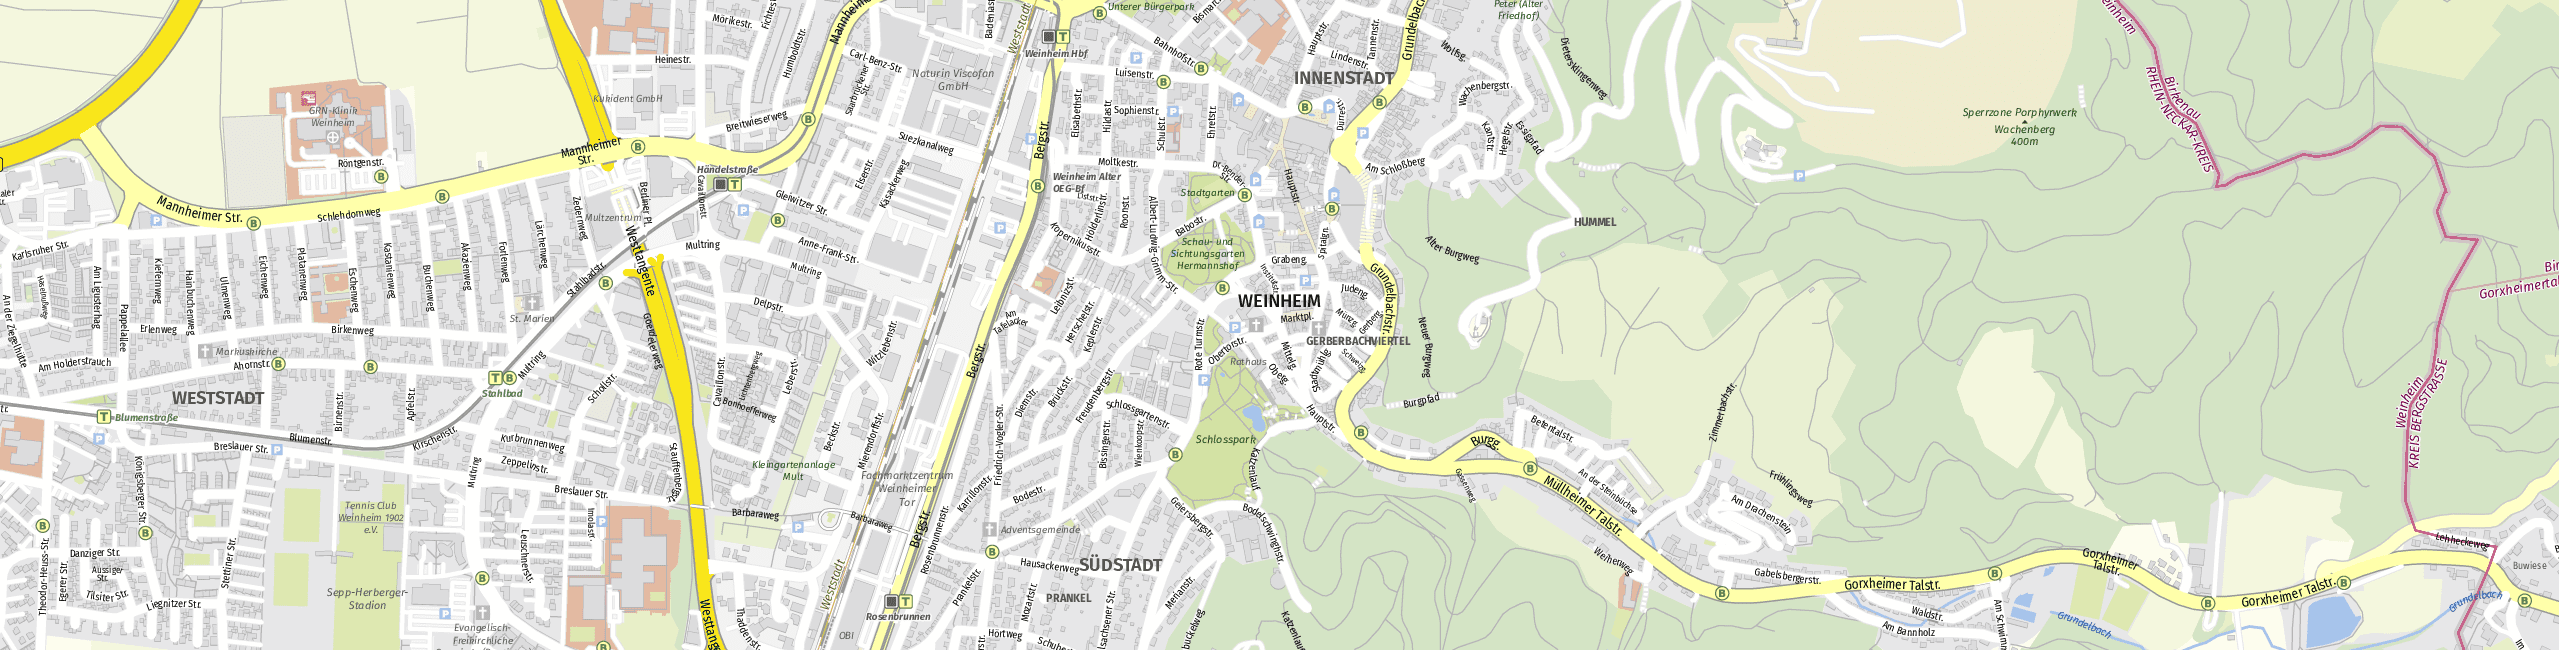 Stadtplan Weinheim zum Downloaden.